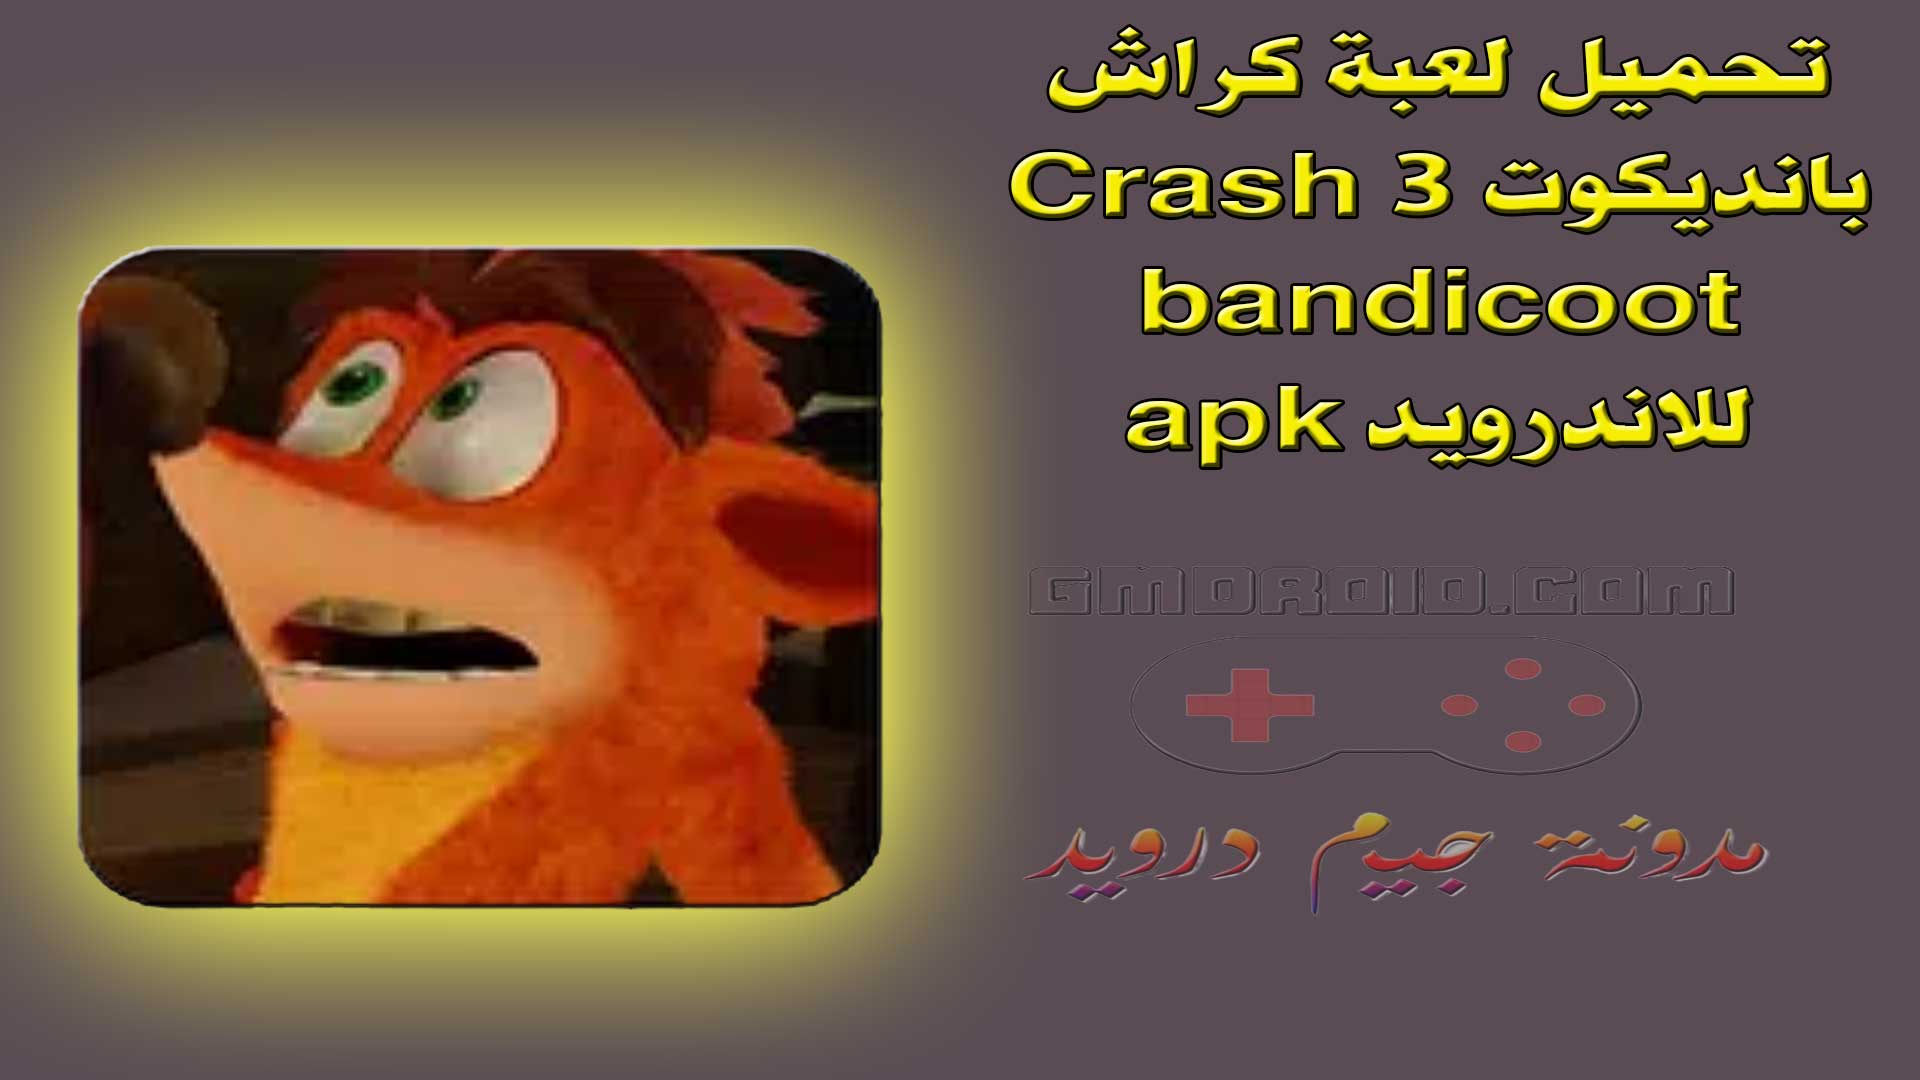 تحميل لعبة كراش بانديكوت 3 Crash bandicoot للاندرويد apk